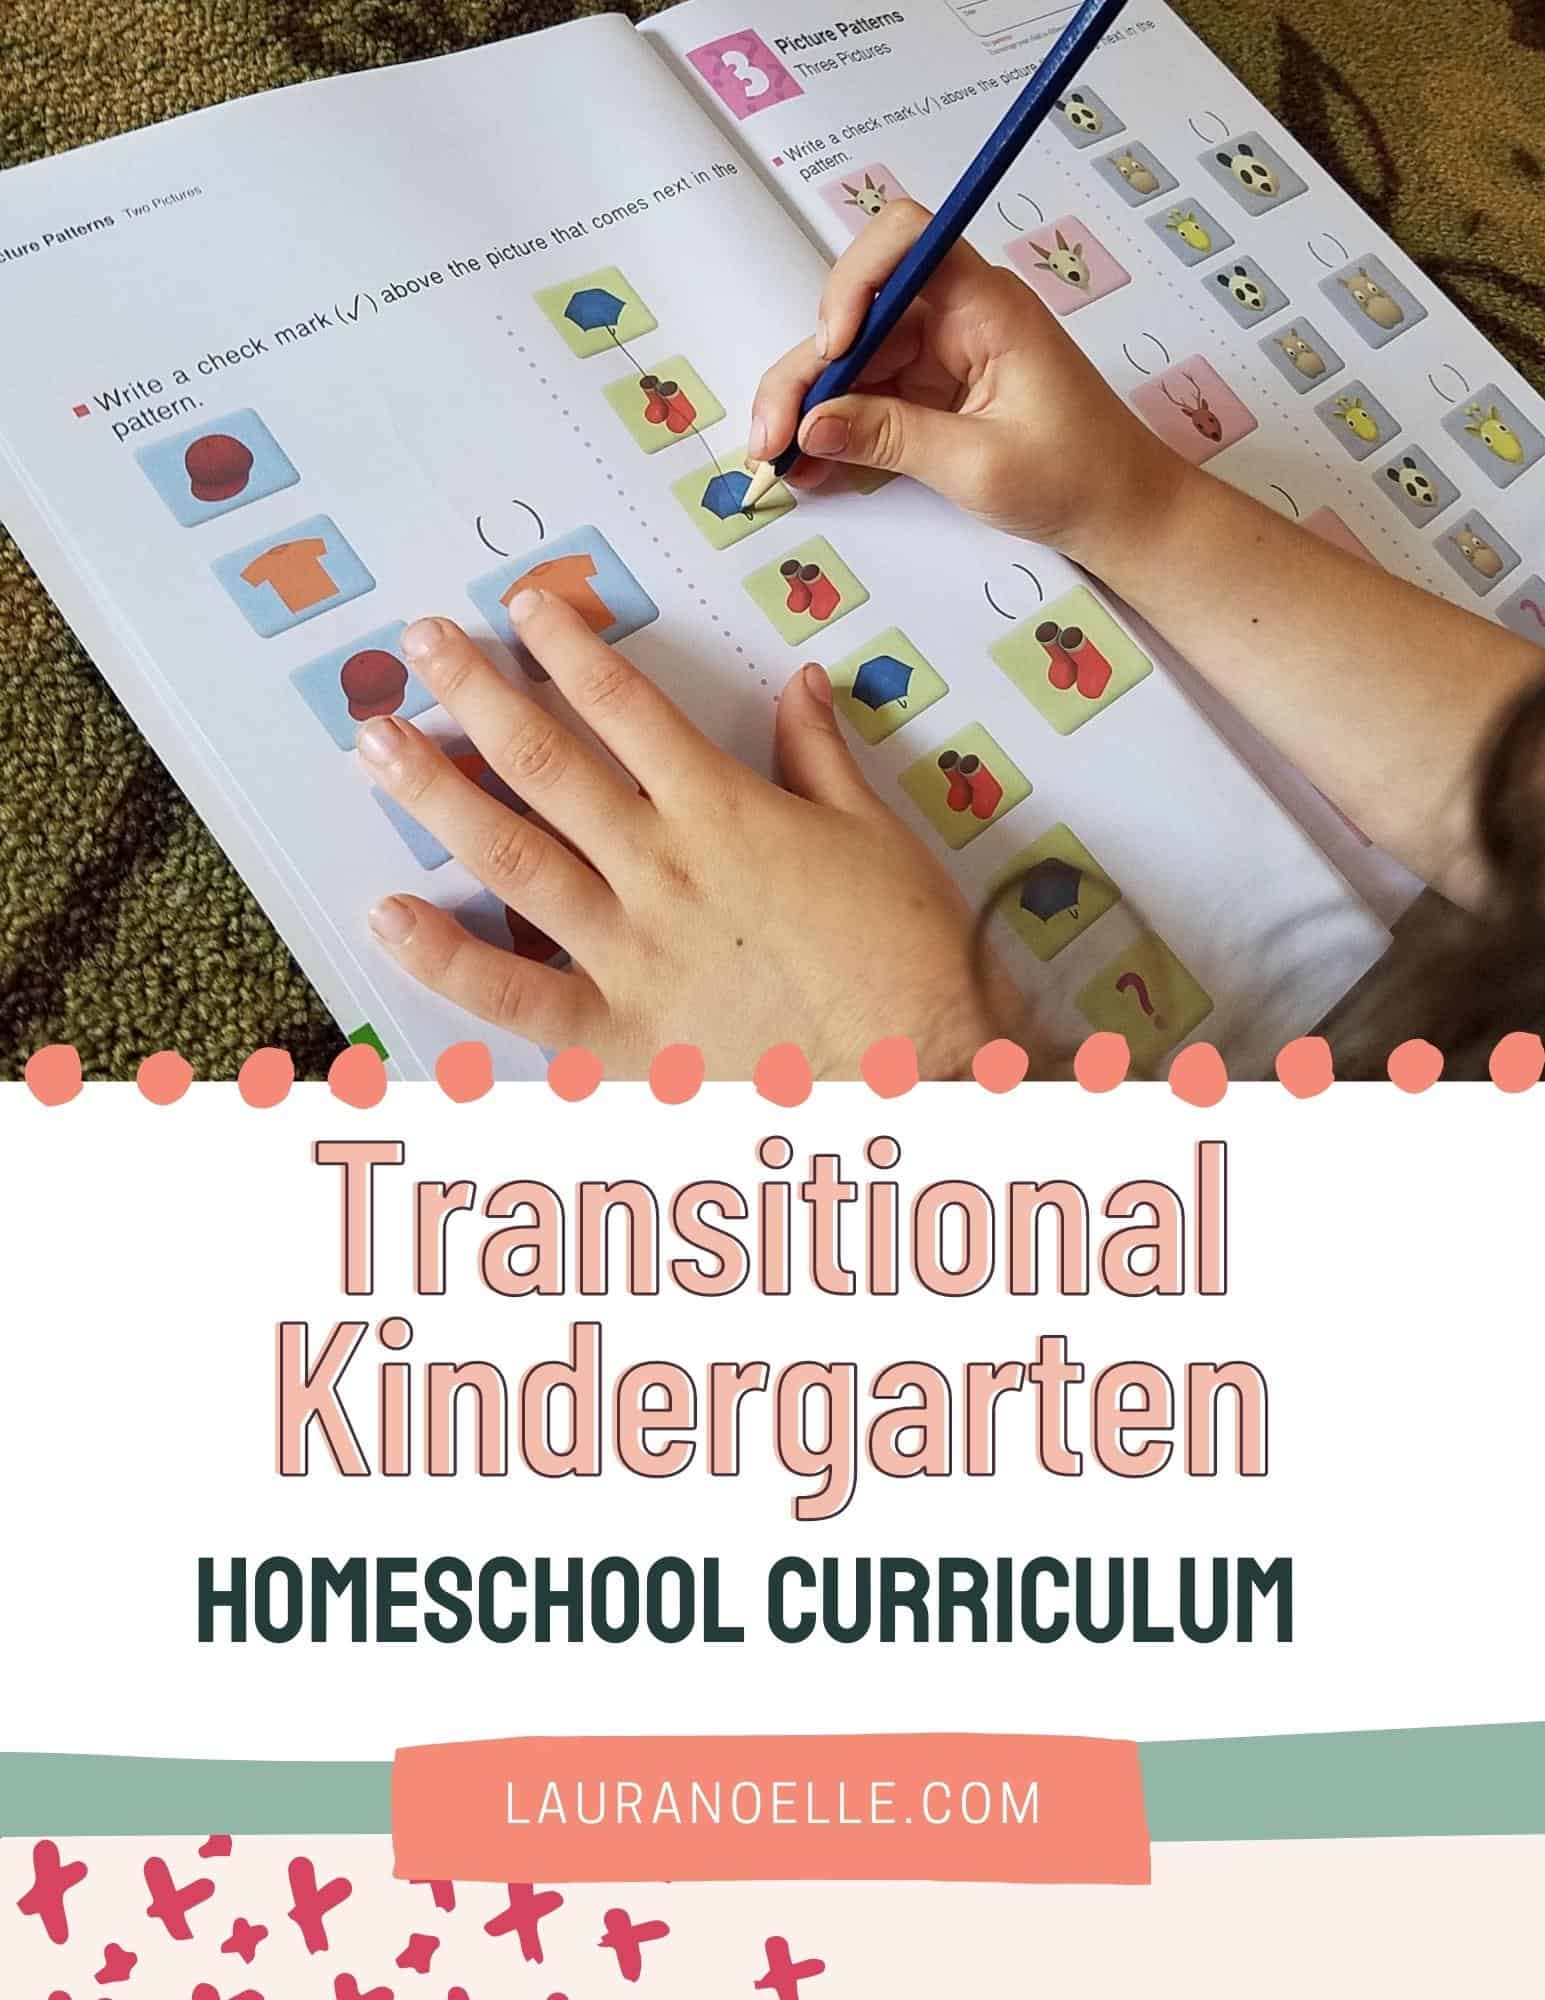 Looking for homeschool curriculum to bridge the gap between preschool and Kindergarten? You might like "Transitional Kindergarten", and here's how to customize your curriculum.